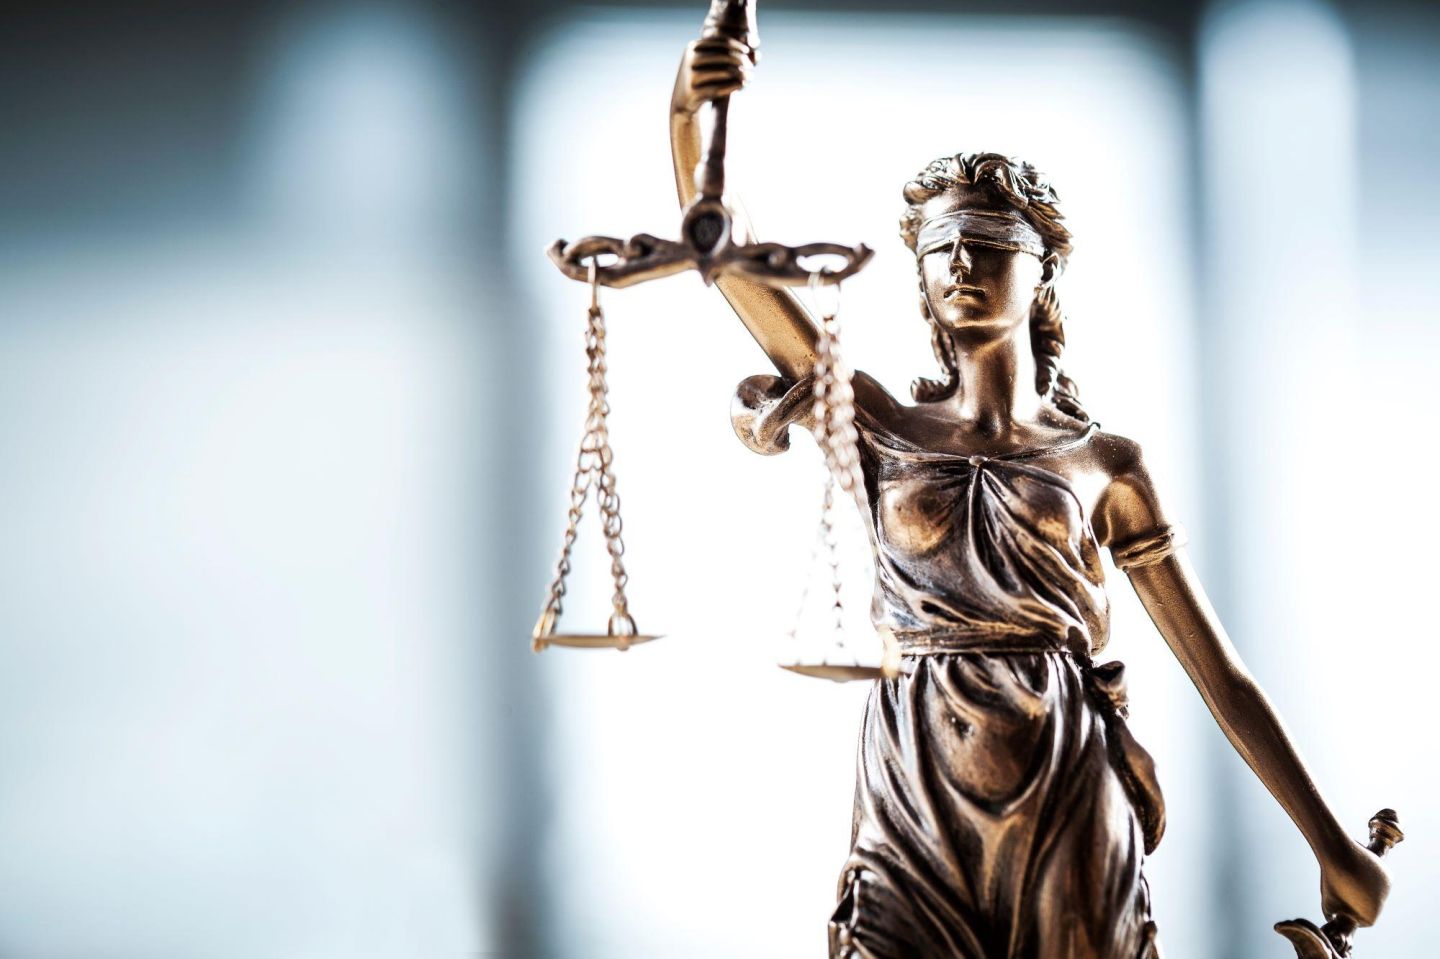 BA (Hons) in Criminal Justice Studies